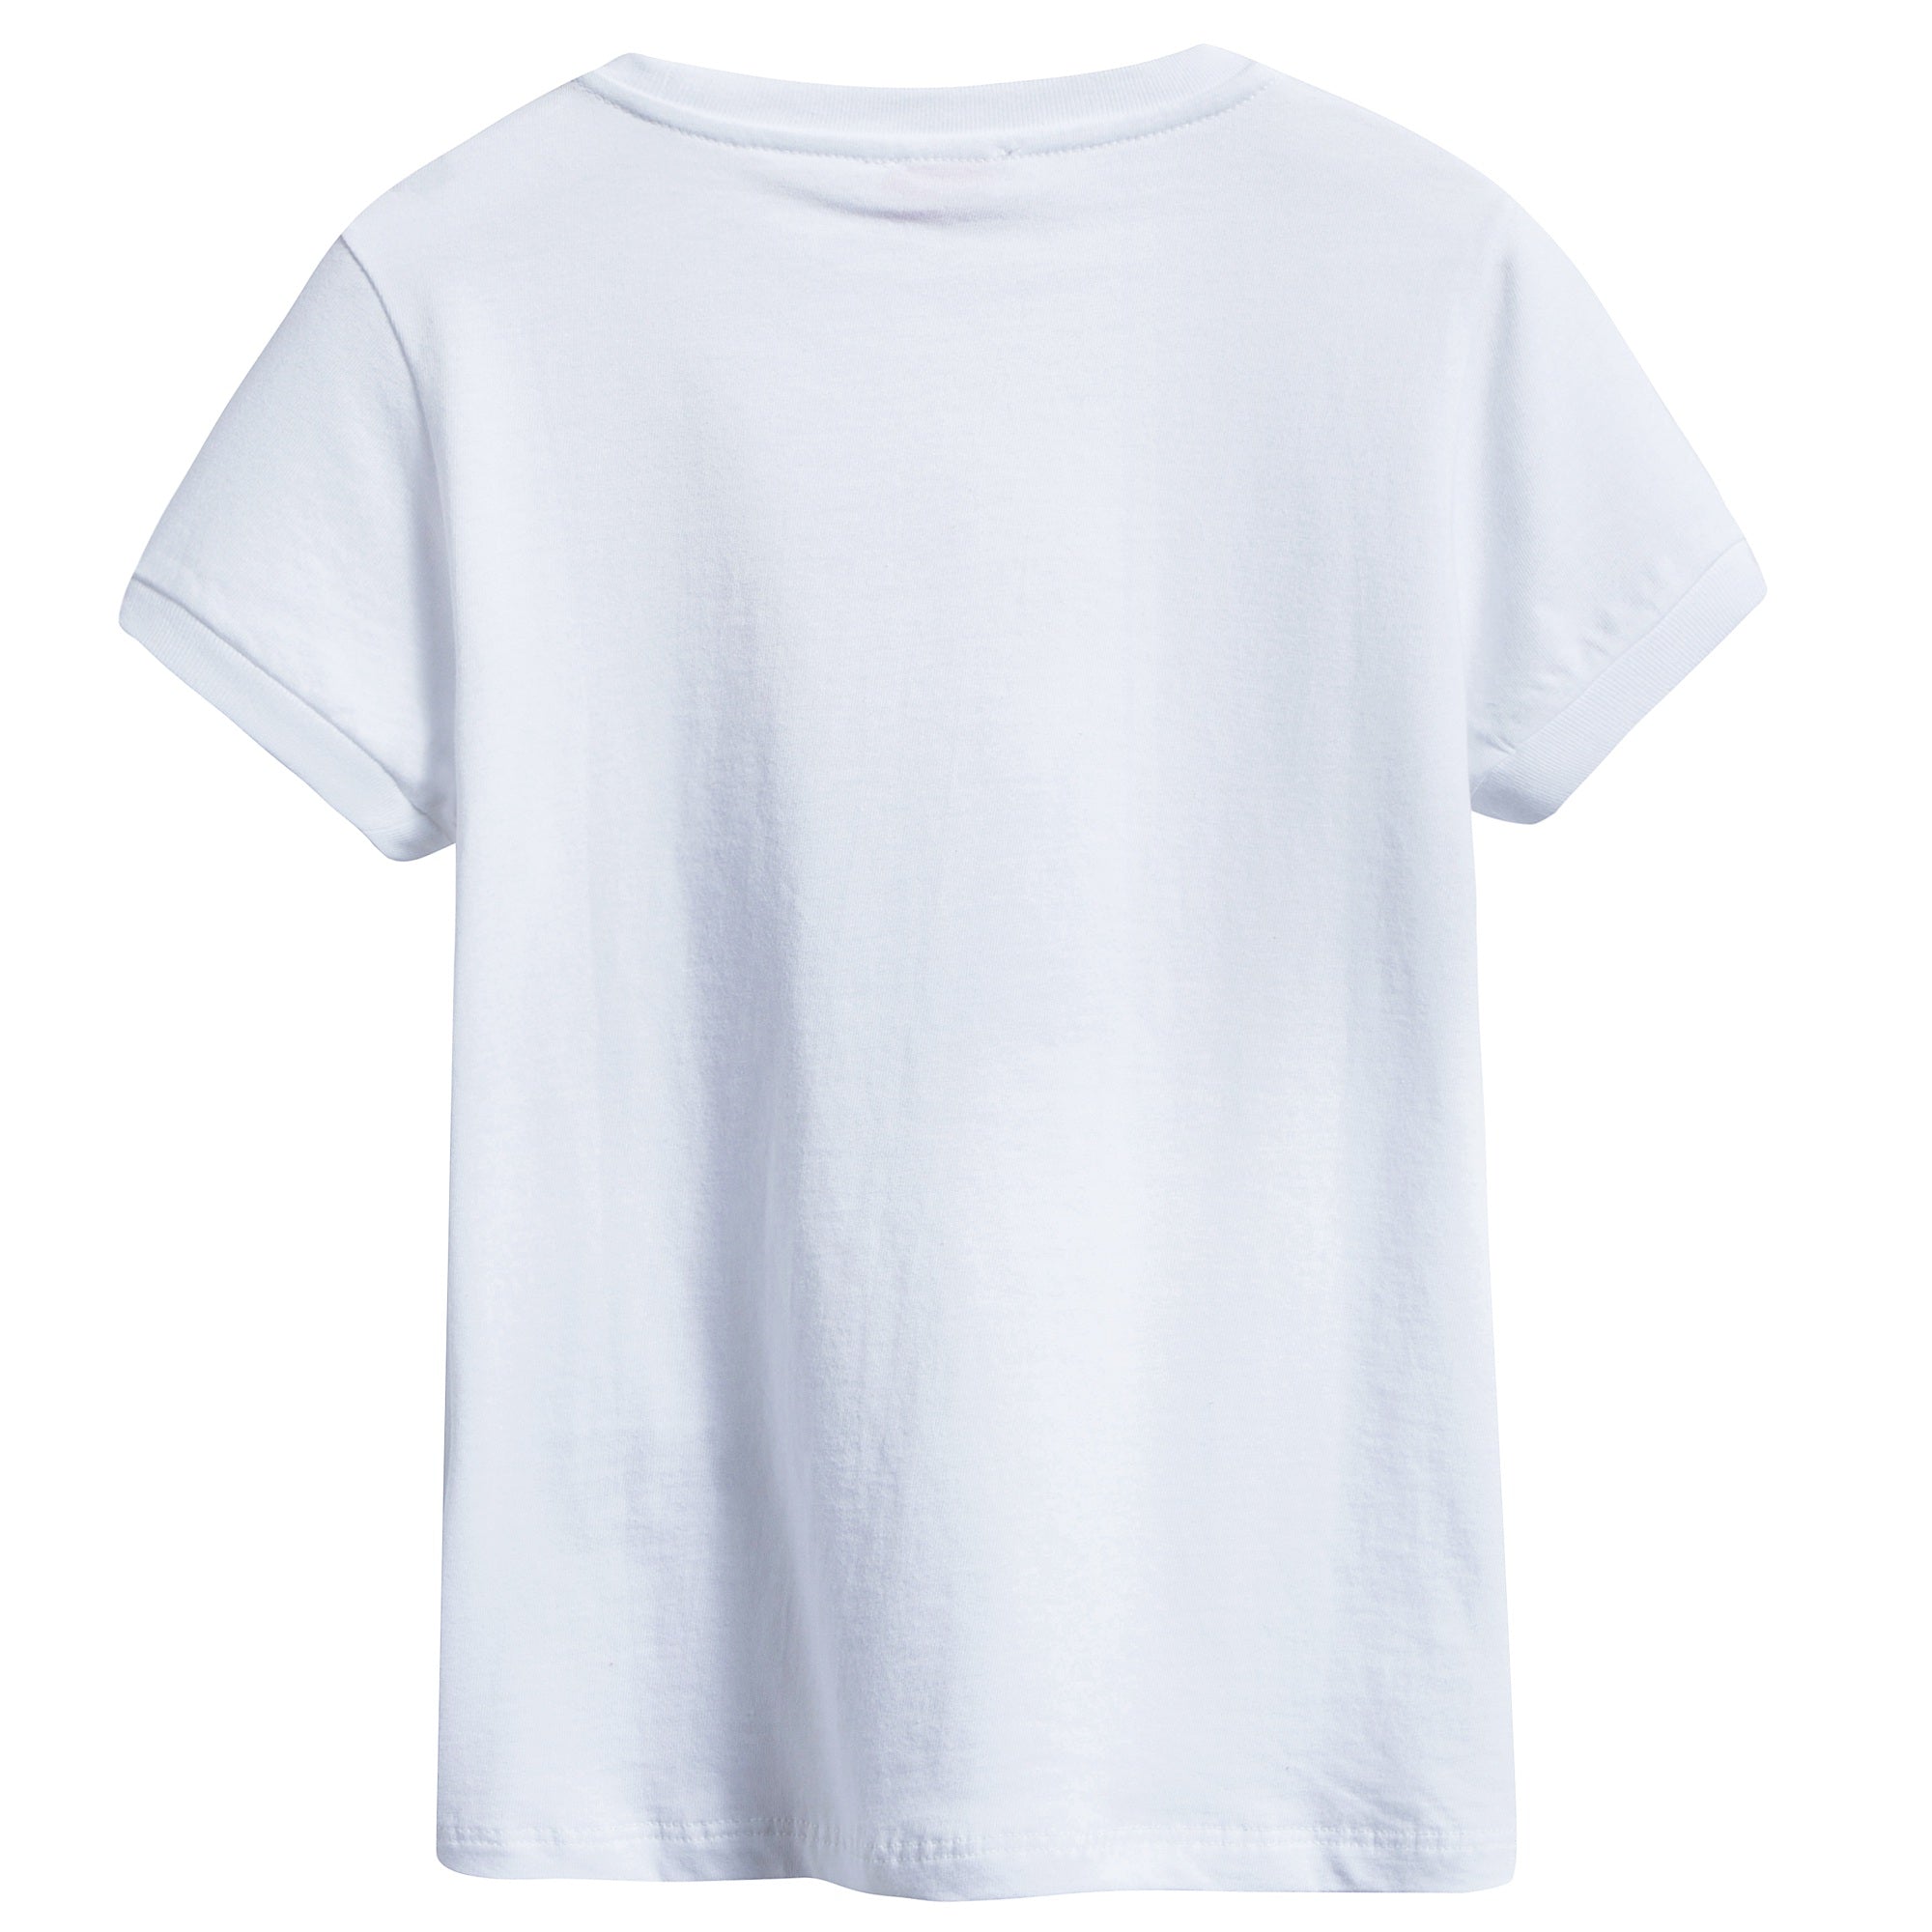 Girls White "Denim Blue Girls" Cotton T-shirt